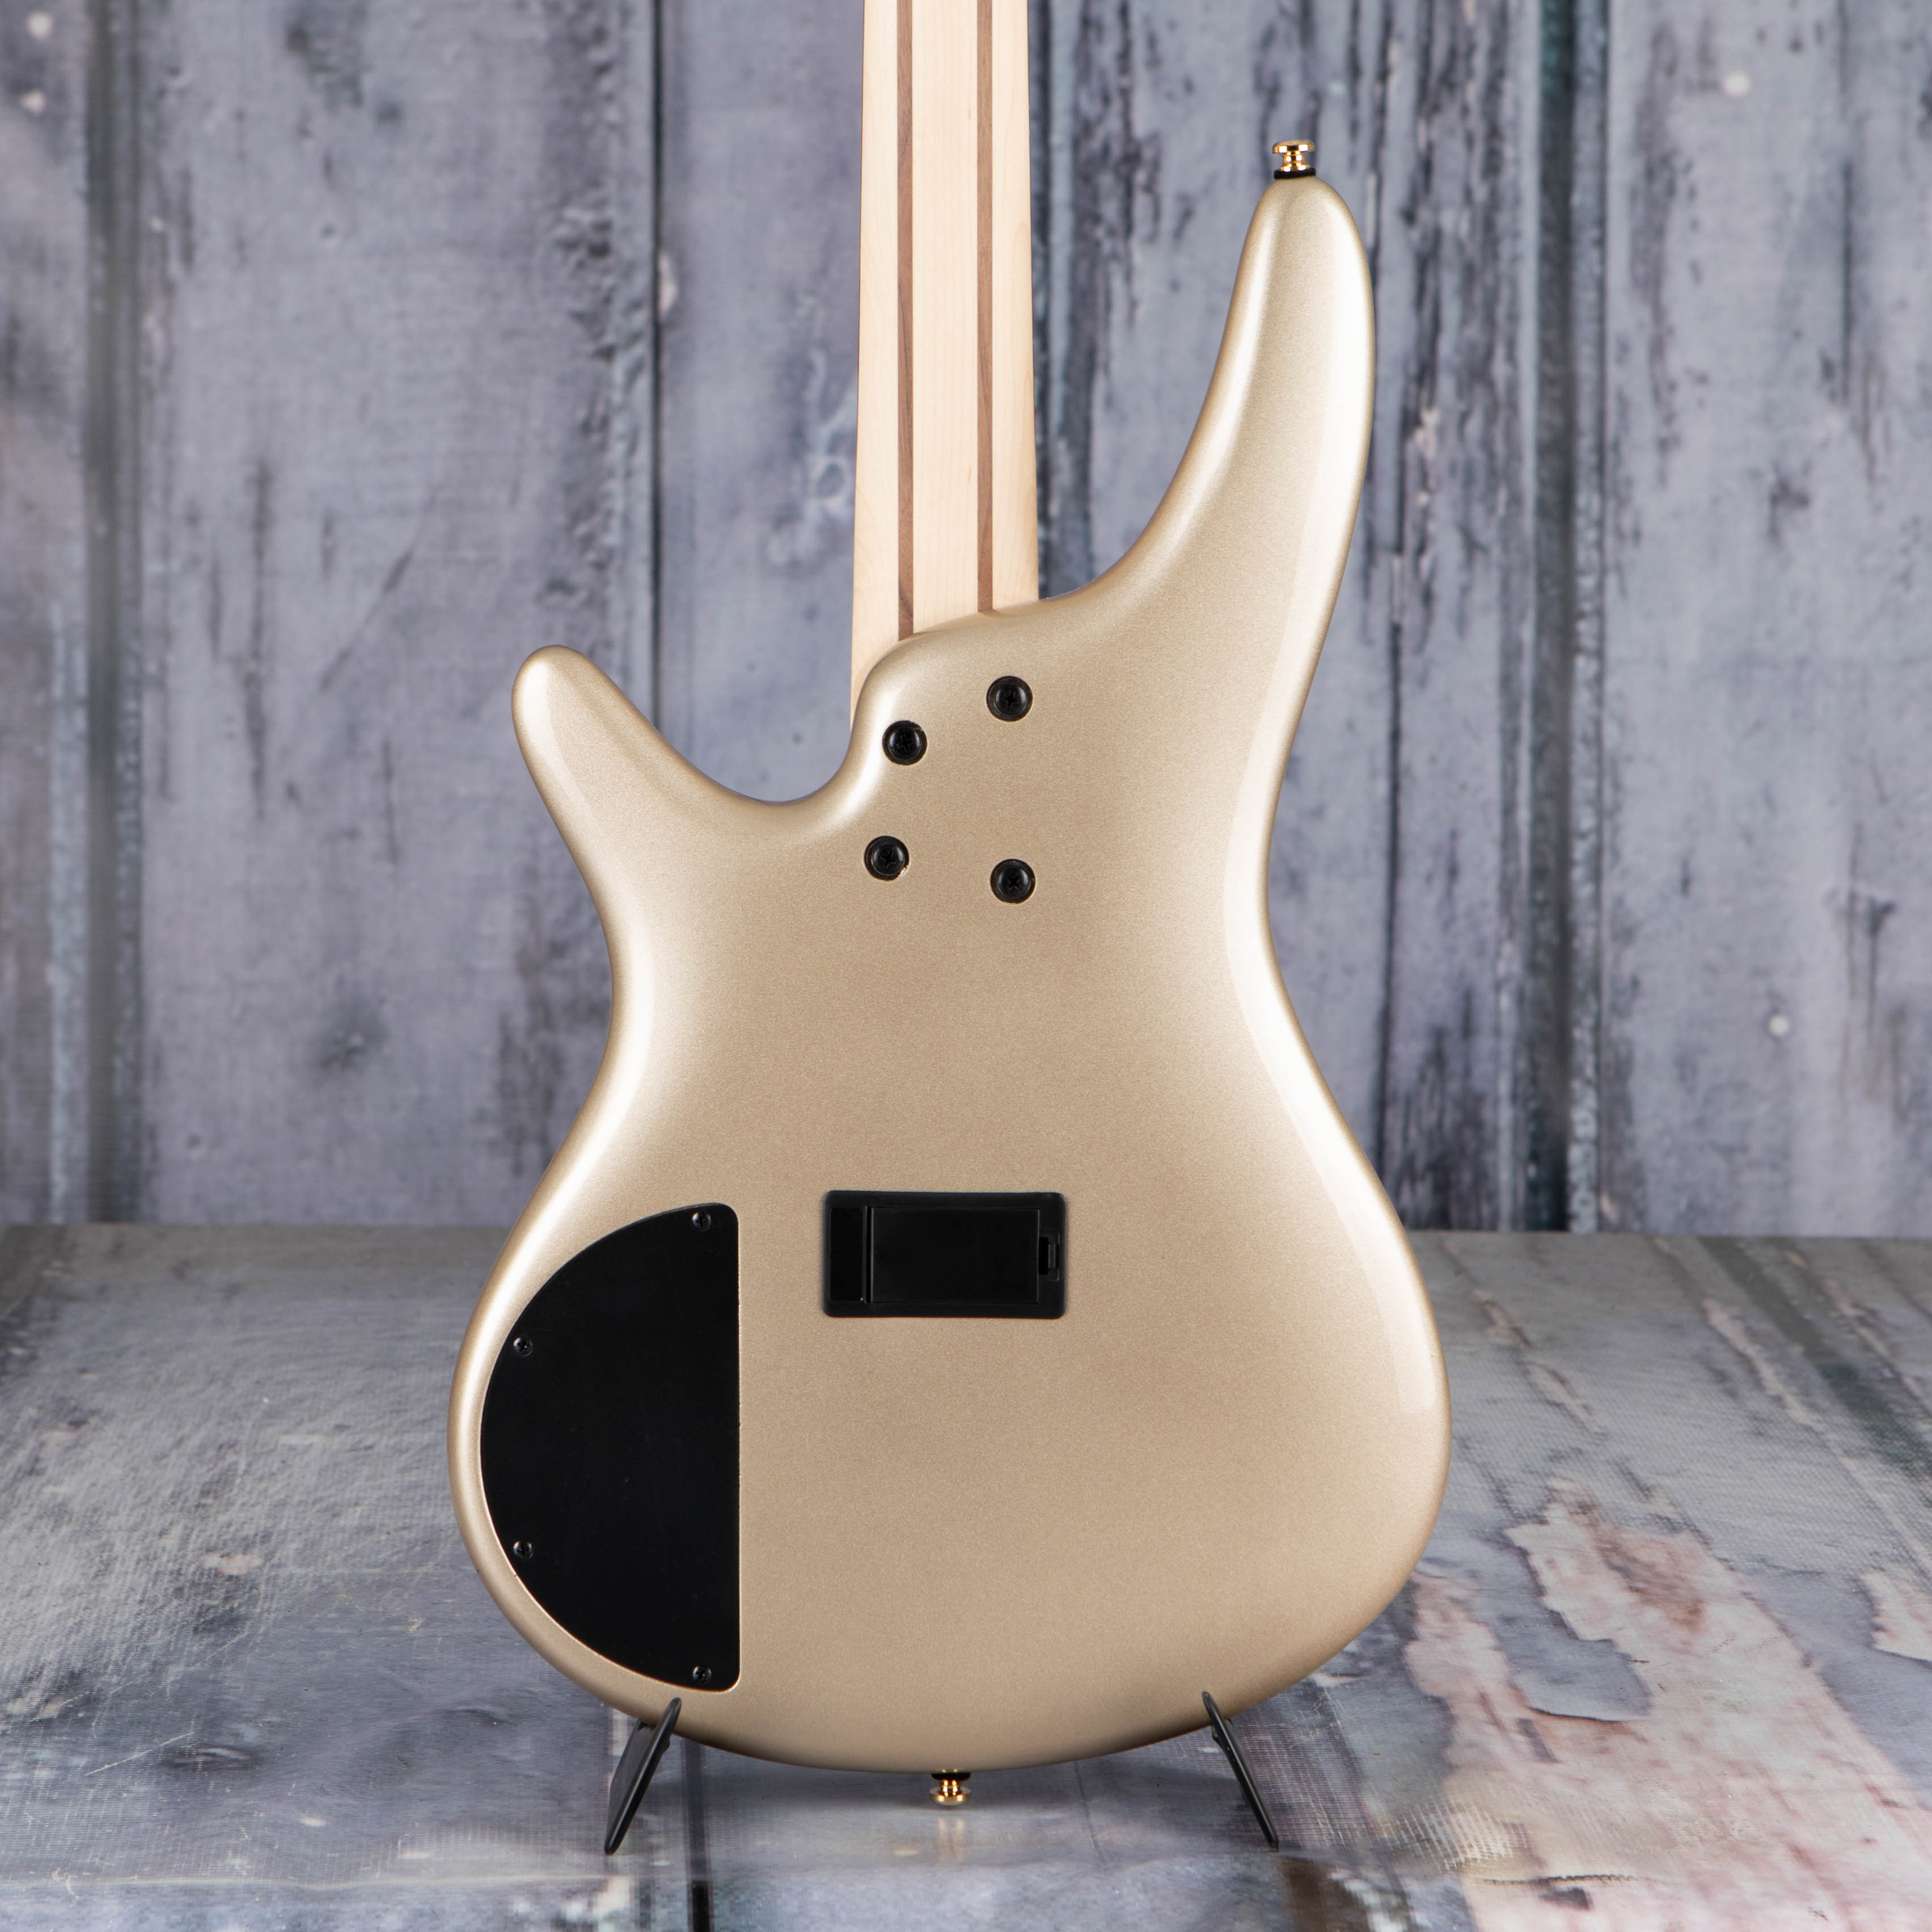 Ibanez Standard SR400EPBDX Electric Bass Guitar, Mars Gold Metallic Burst, back closeup